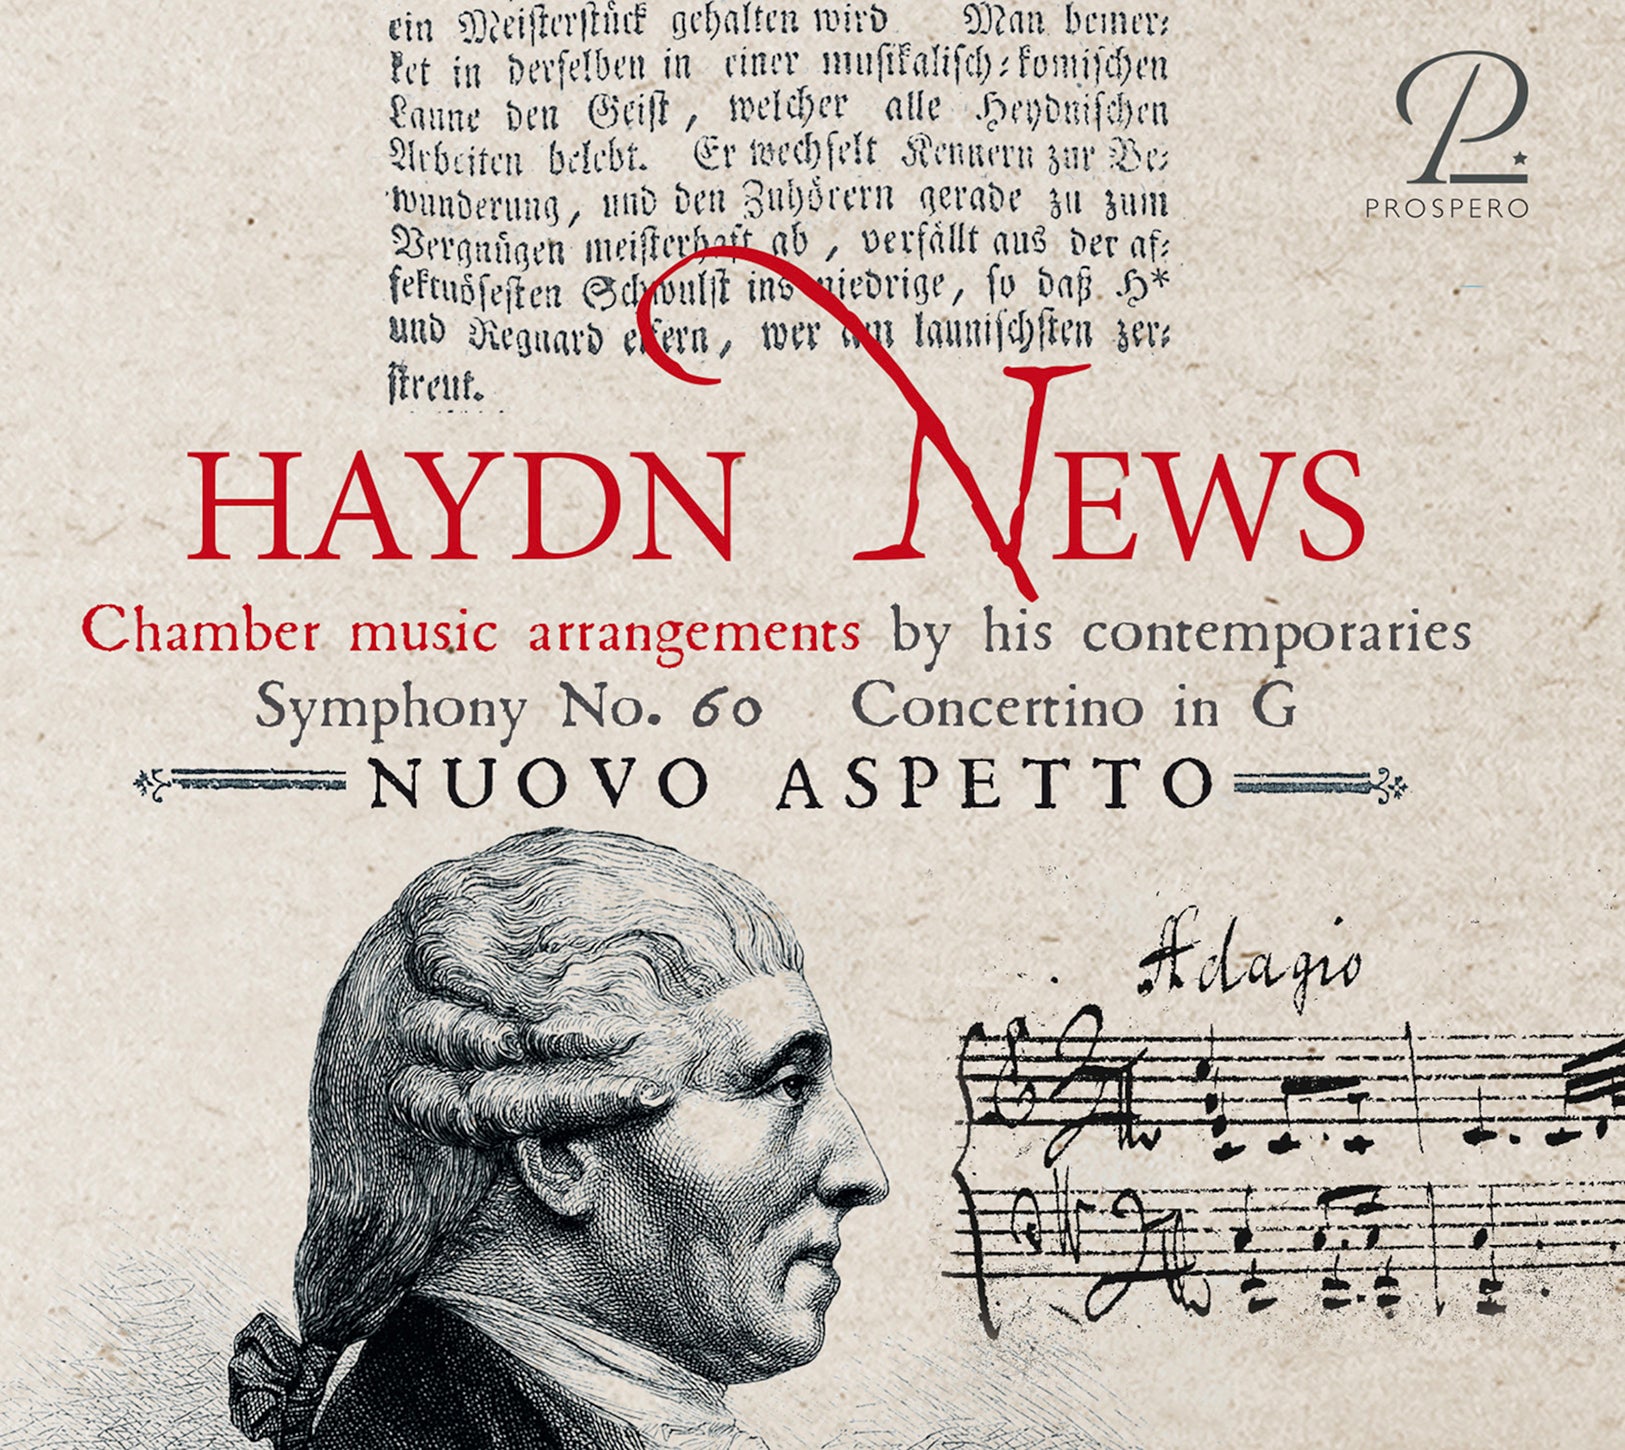 Haydn News: Chamber Music Arrangements / Nuovo Aspetto